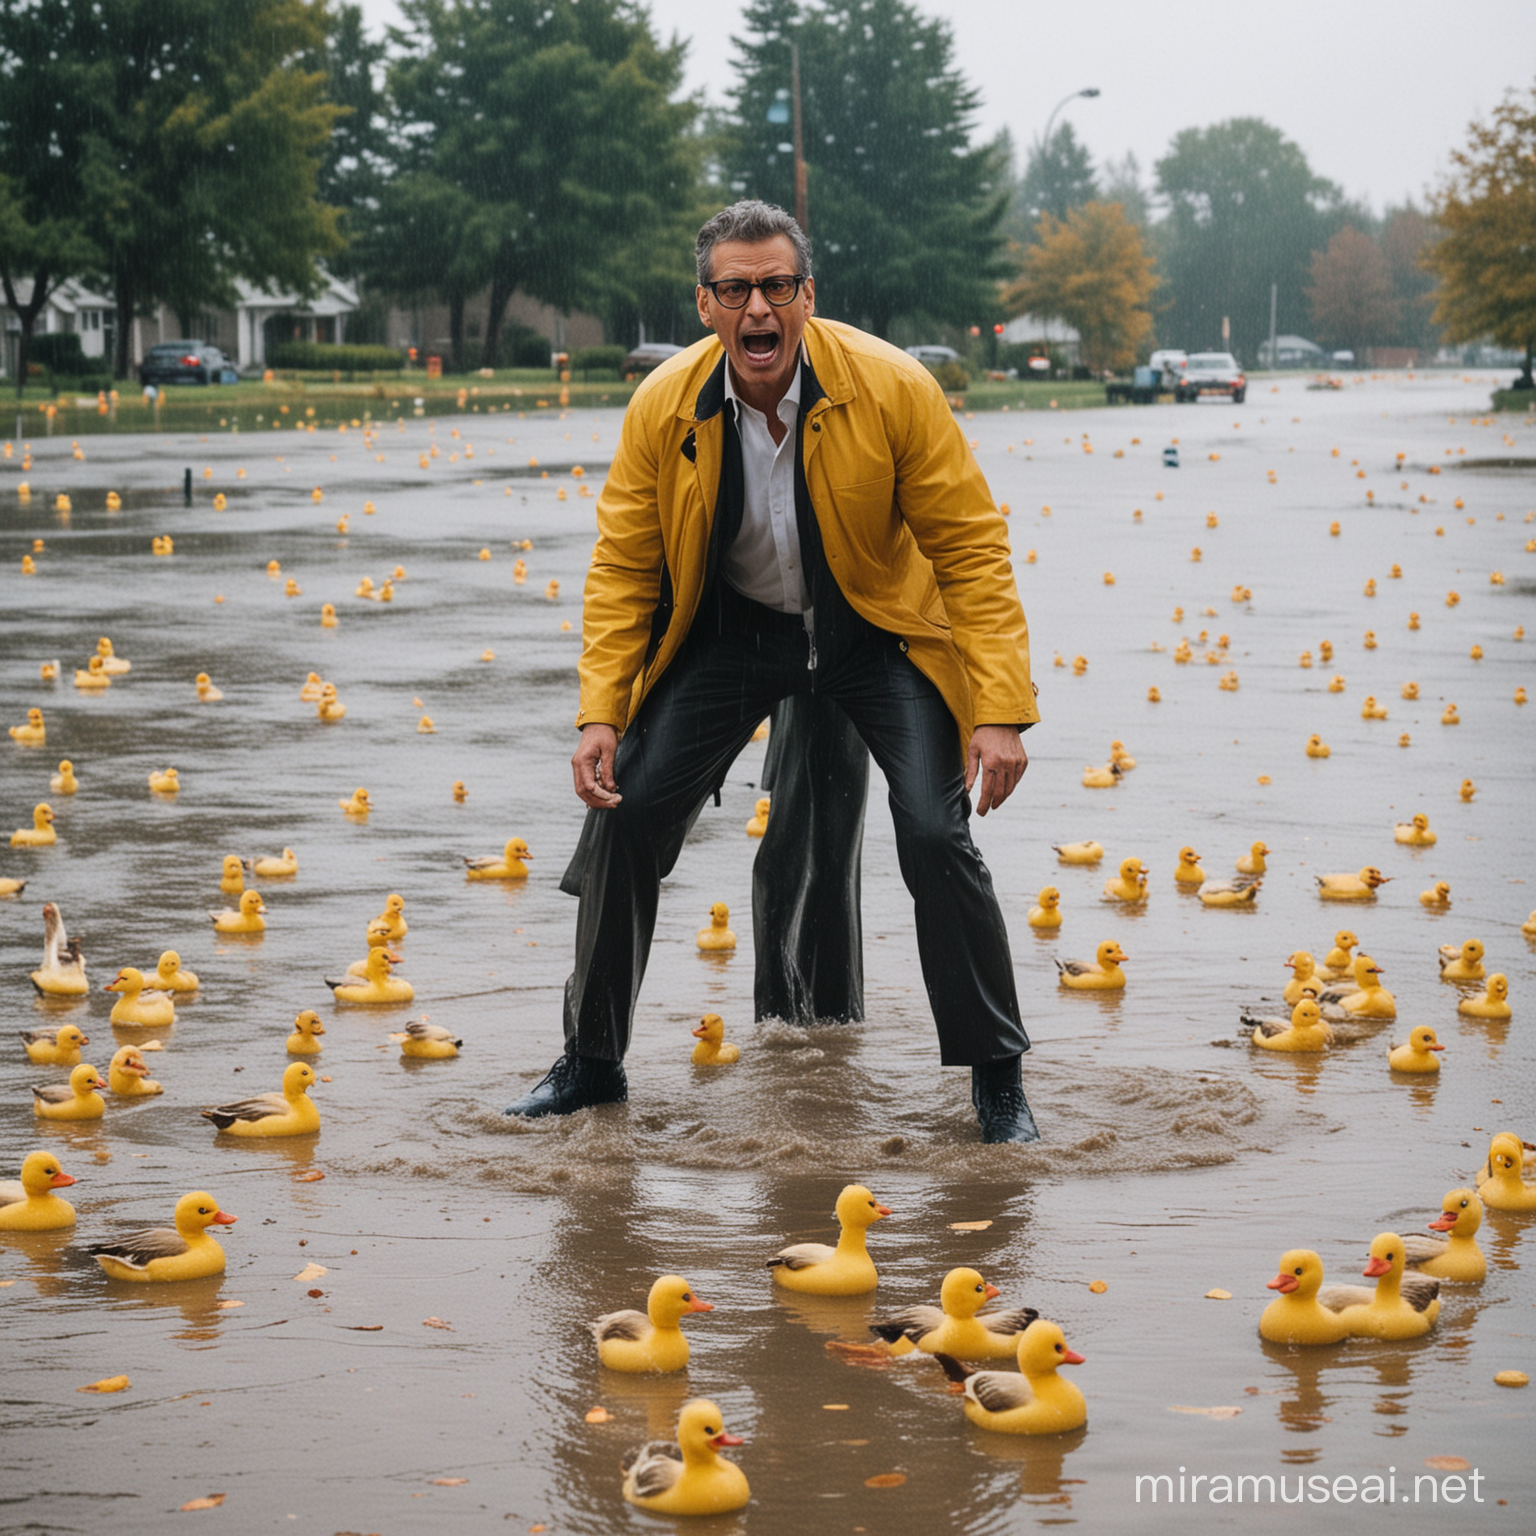 Actor Jeff Goldblum Battling Canadian Goose in Flooded Parking Lot Amid Rubber Ducks